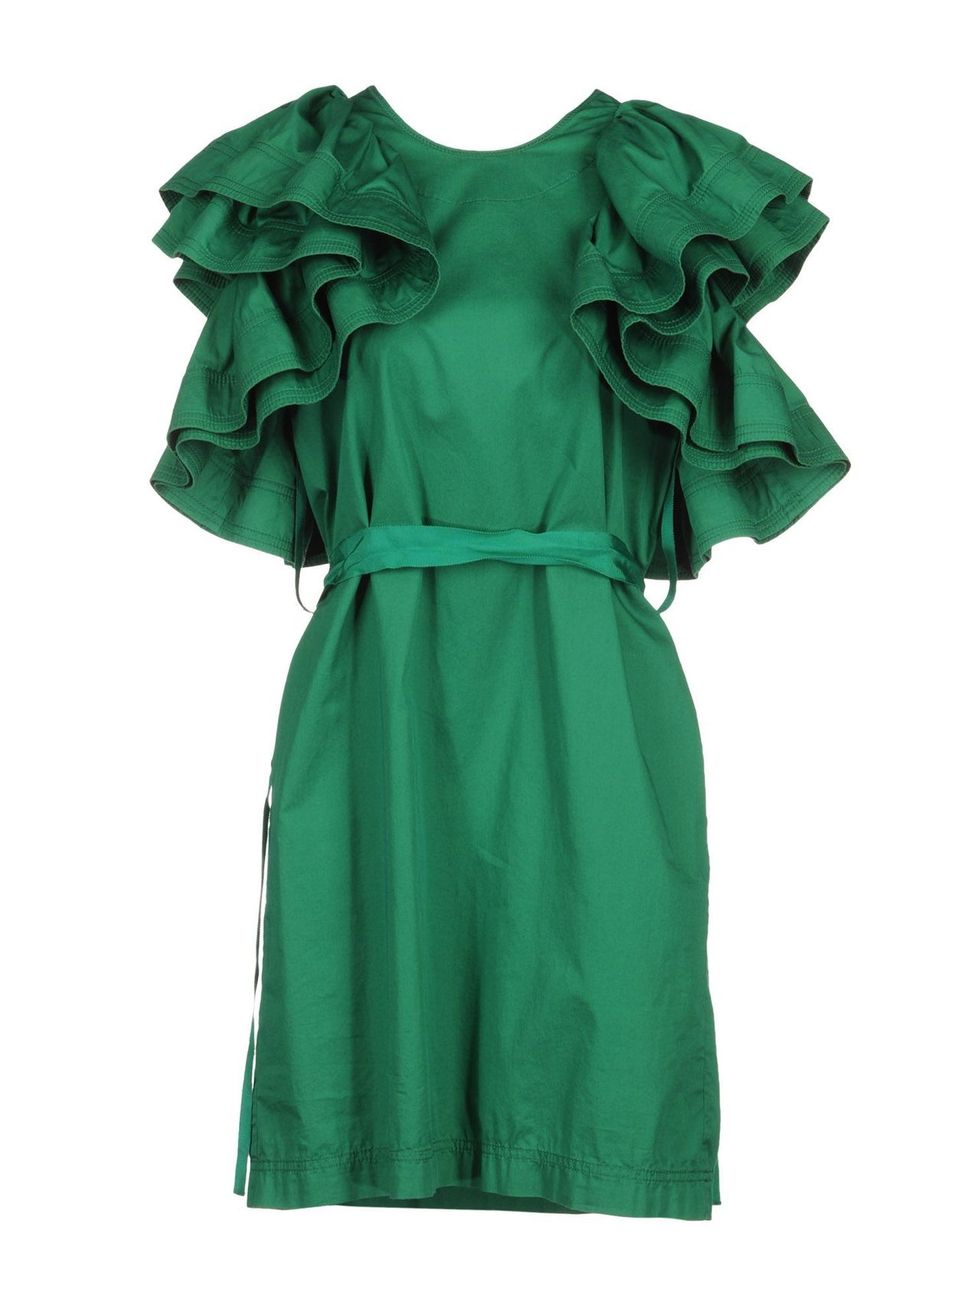 Green, Sleeve, Textile, Collar, Teal, Turquoise, Aqua, Dress, Fashion, One-piece garment, 